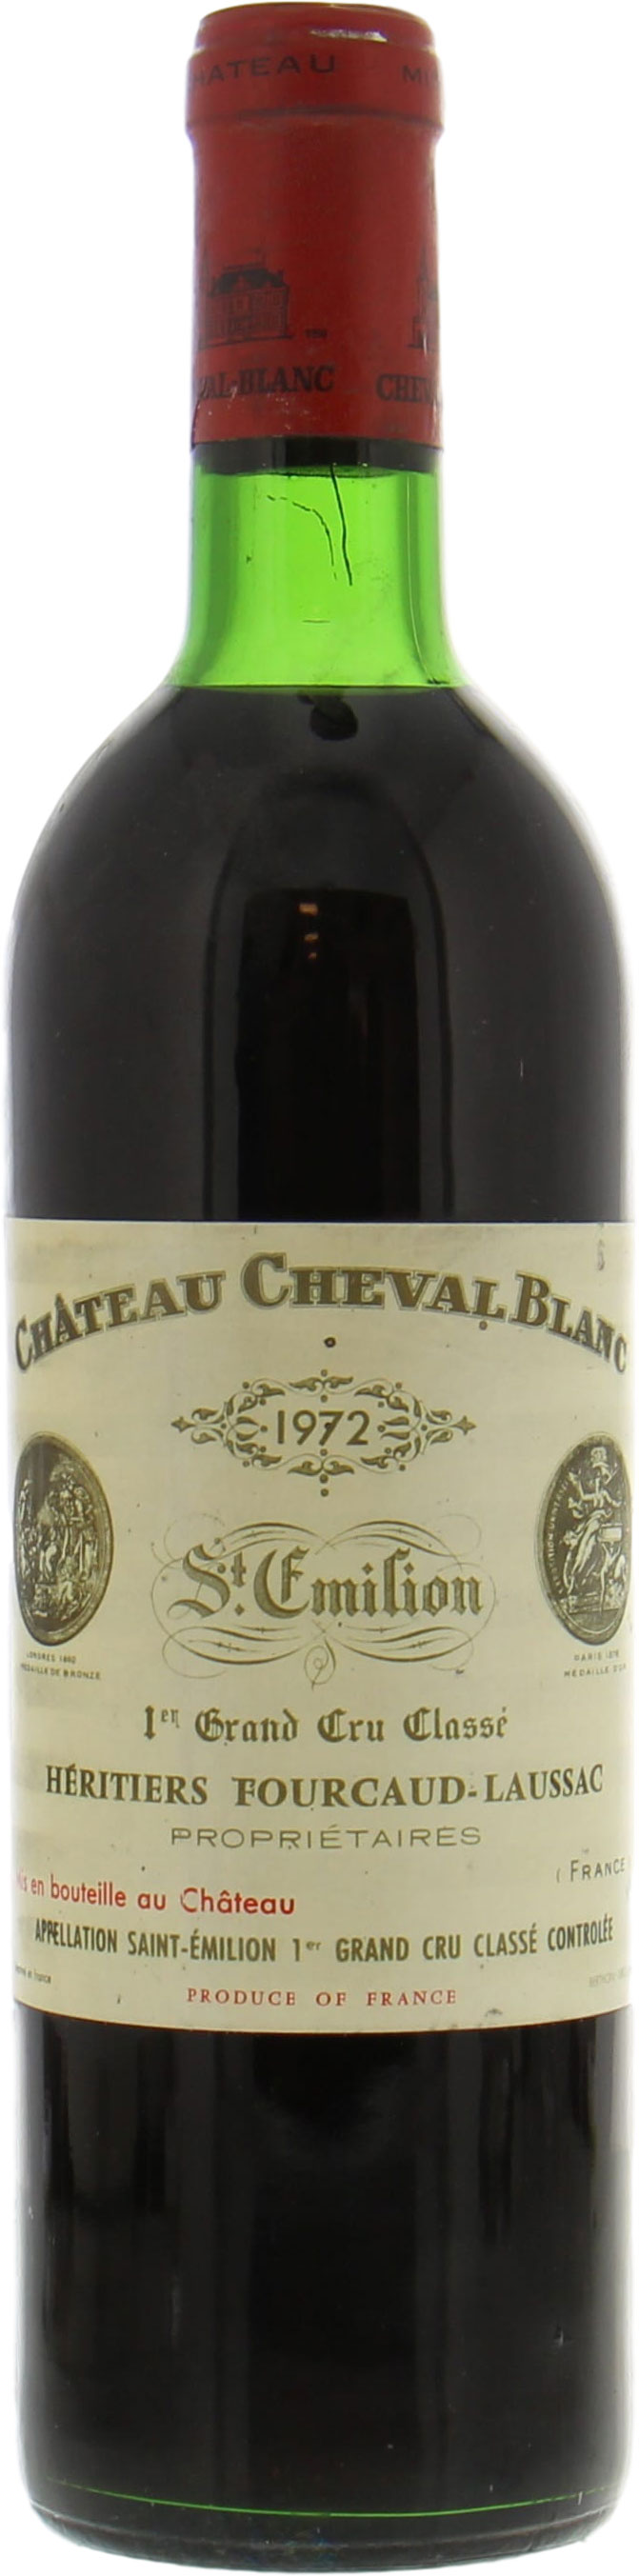 Chateau Cheval Blanc - Chateau Cheval Blanc 1972 Perfect